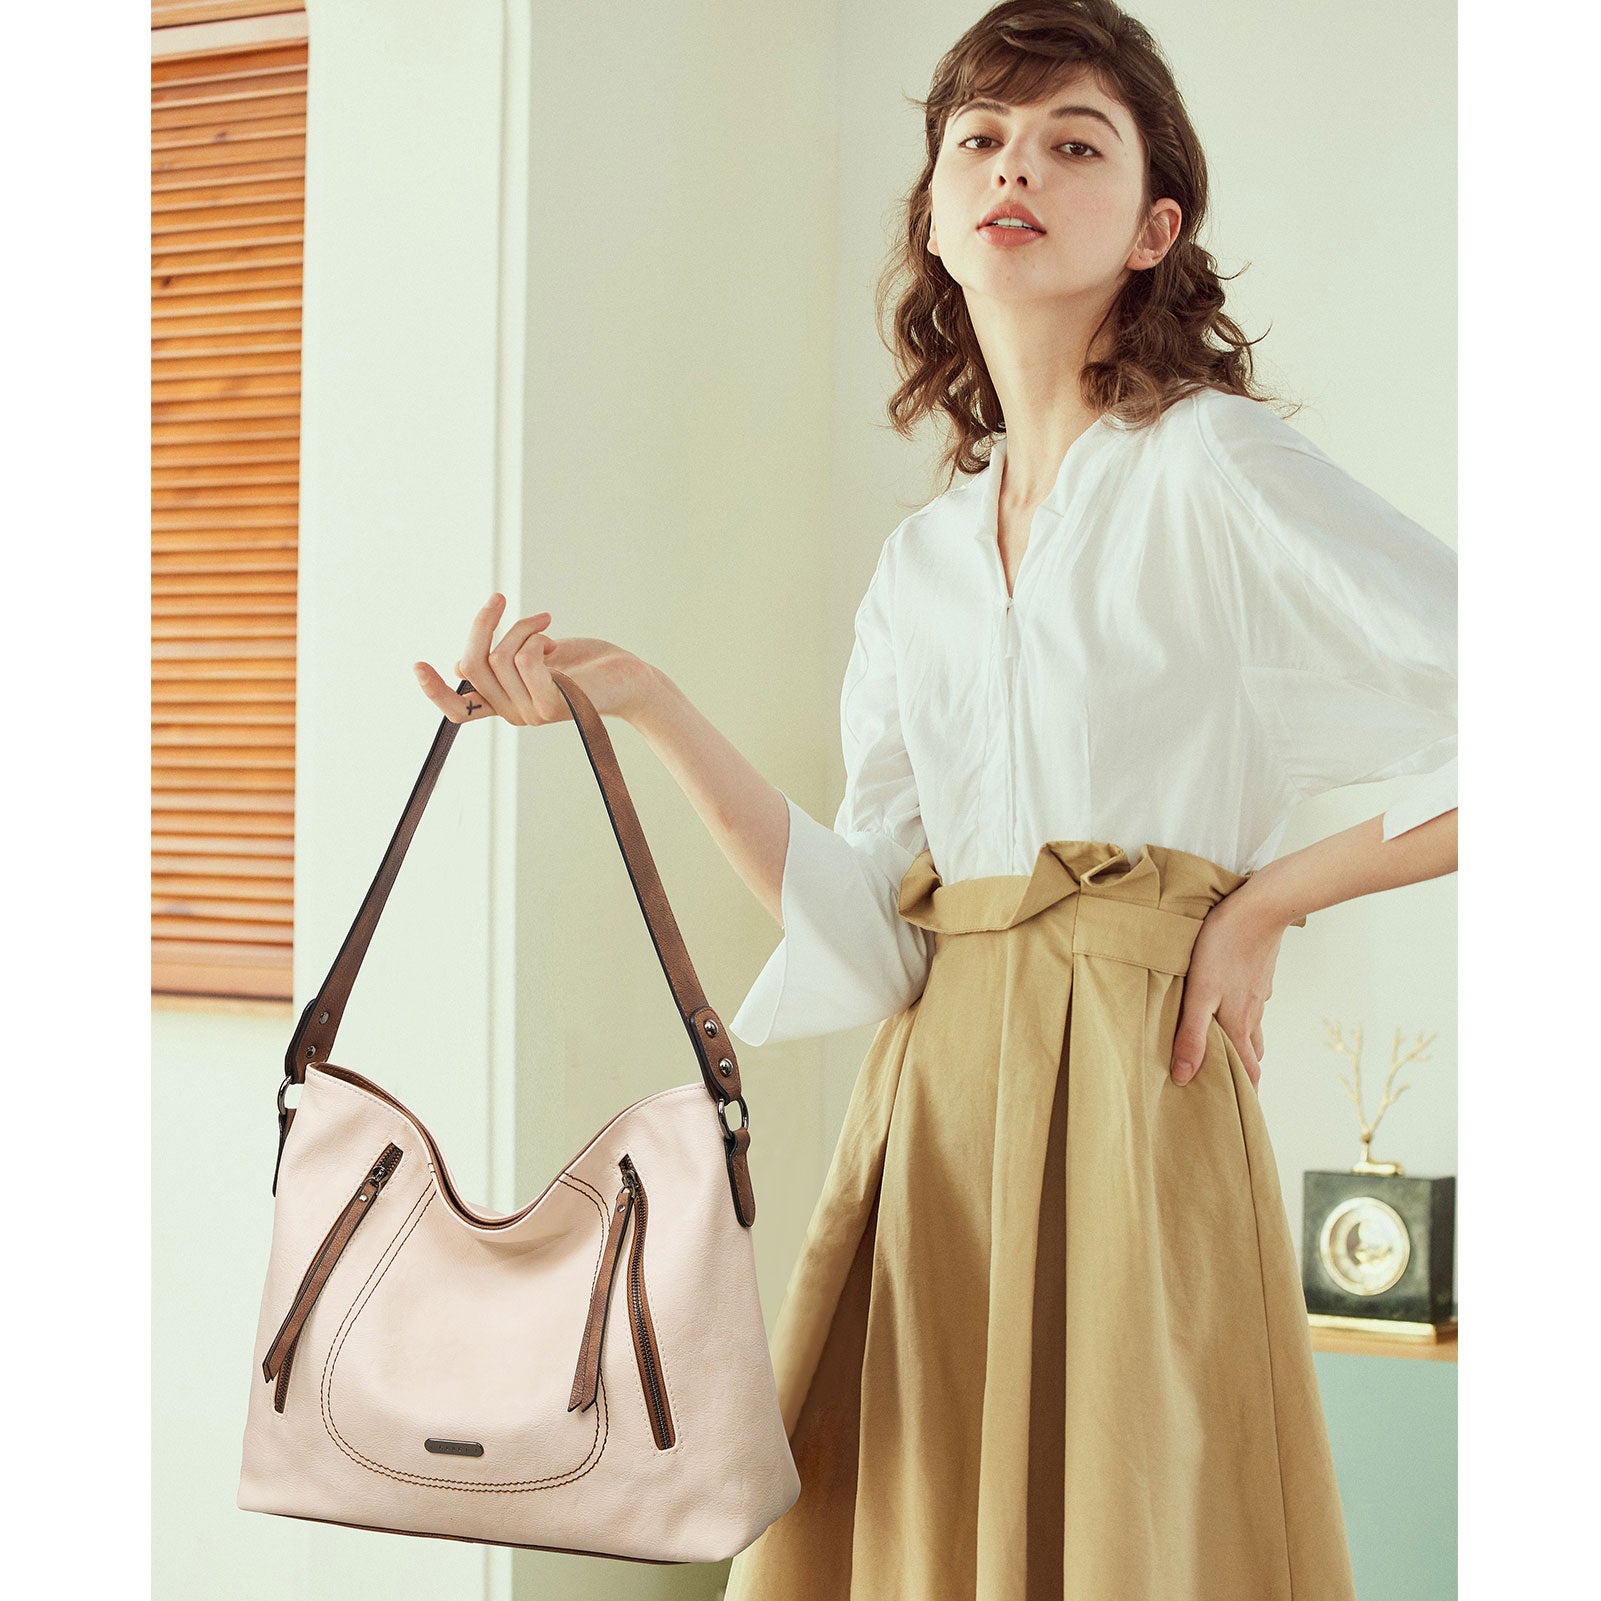 CLUCI Handbags for Women Leather Designer Hobo Tote Vintage Purses Ladies Crossbody Shoulder Bag